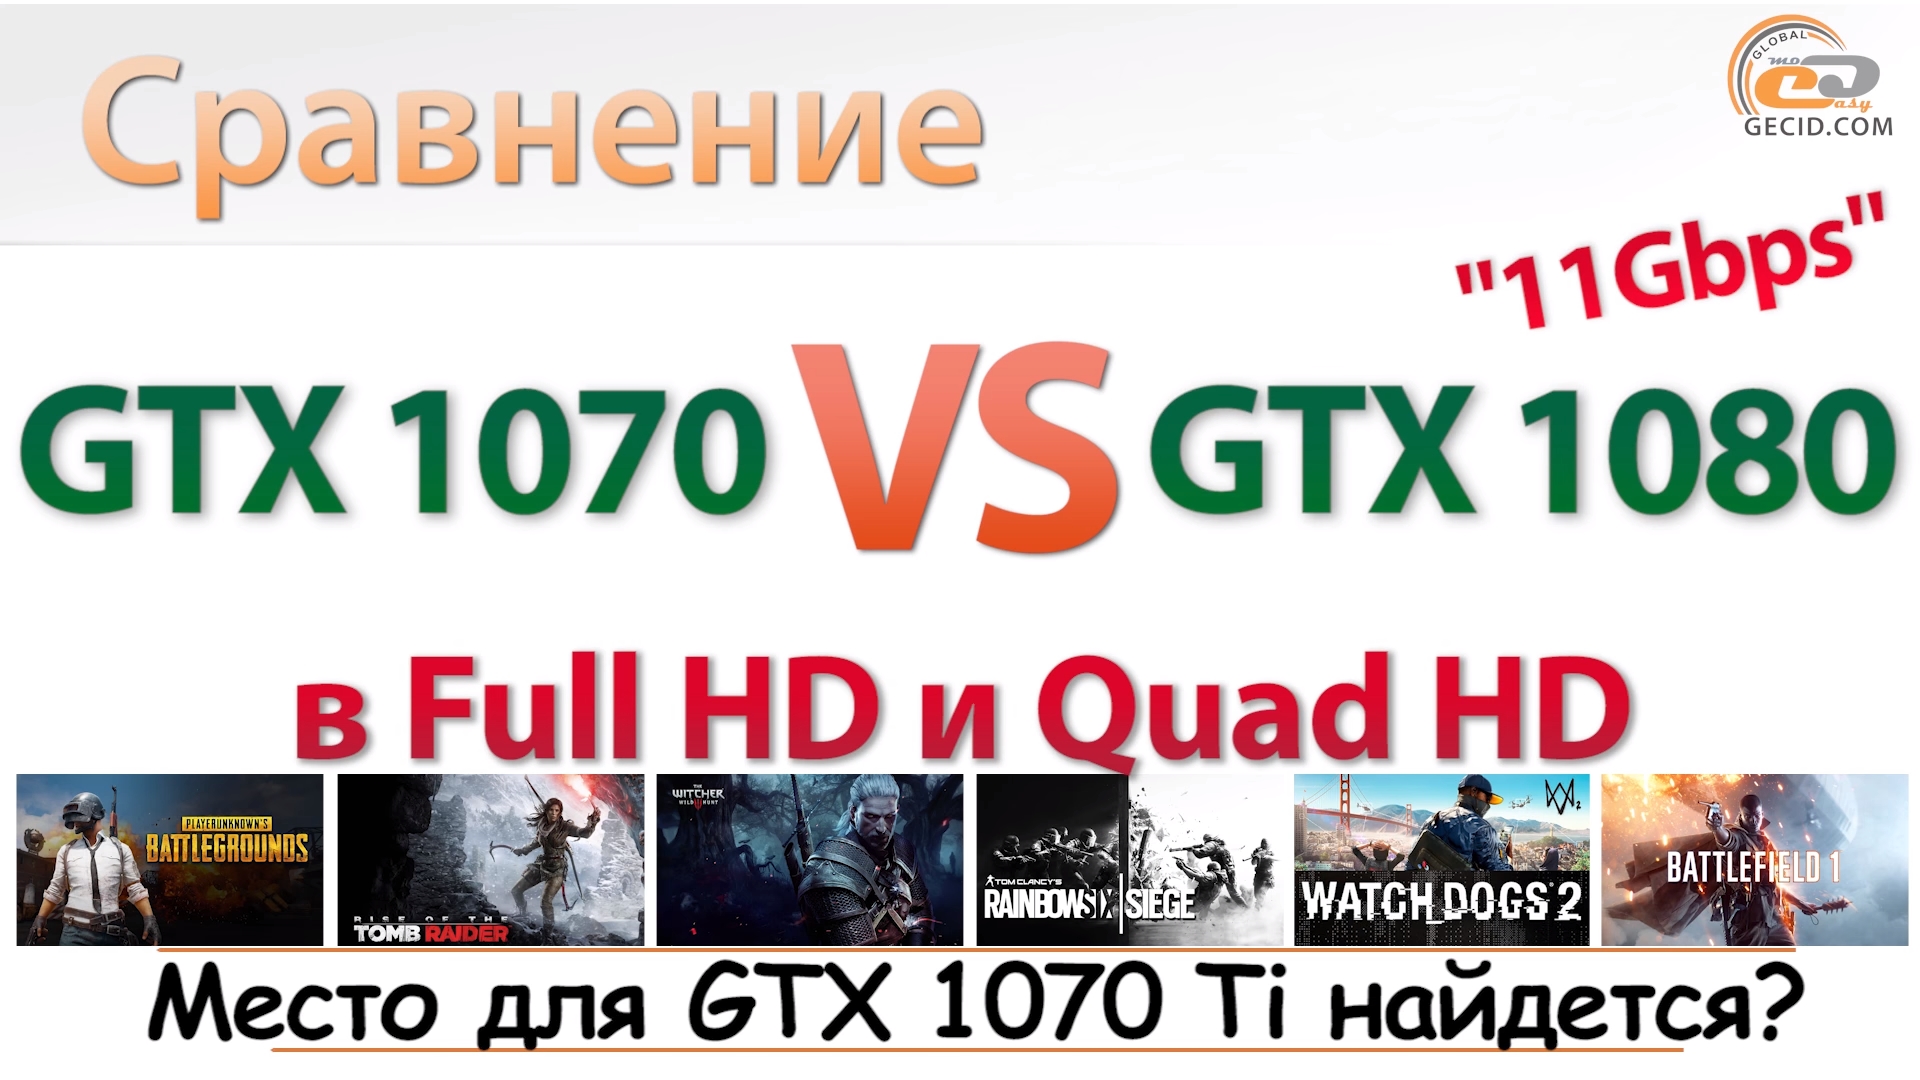 Сравнение GeForce GTX 1070 vs GeForce GTX 1080 11Gbps для игр в Full HD и  Quad HD GECID.com. Страница 1